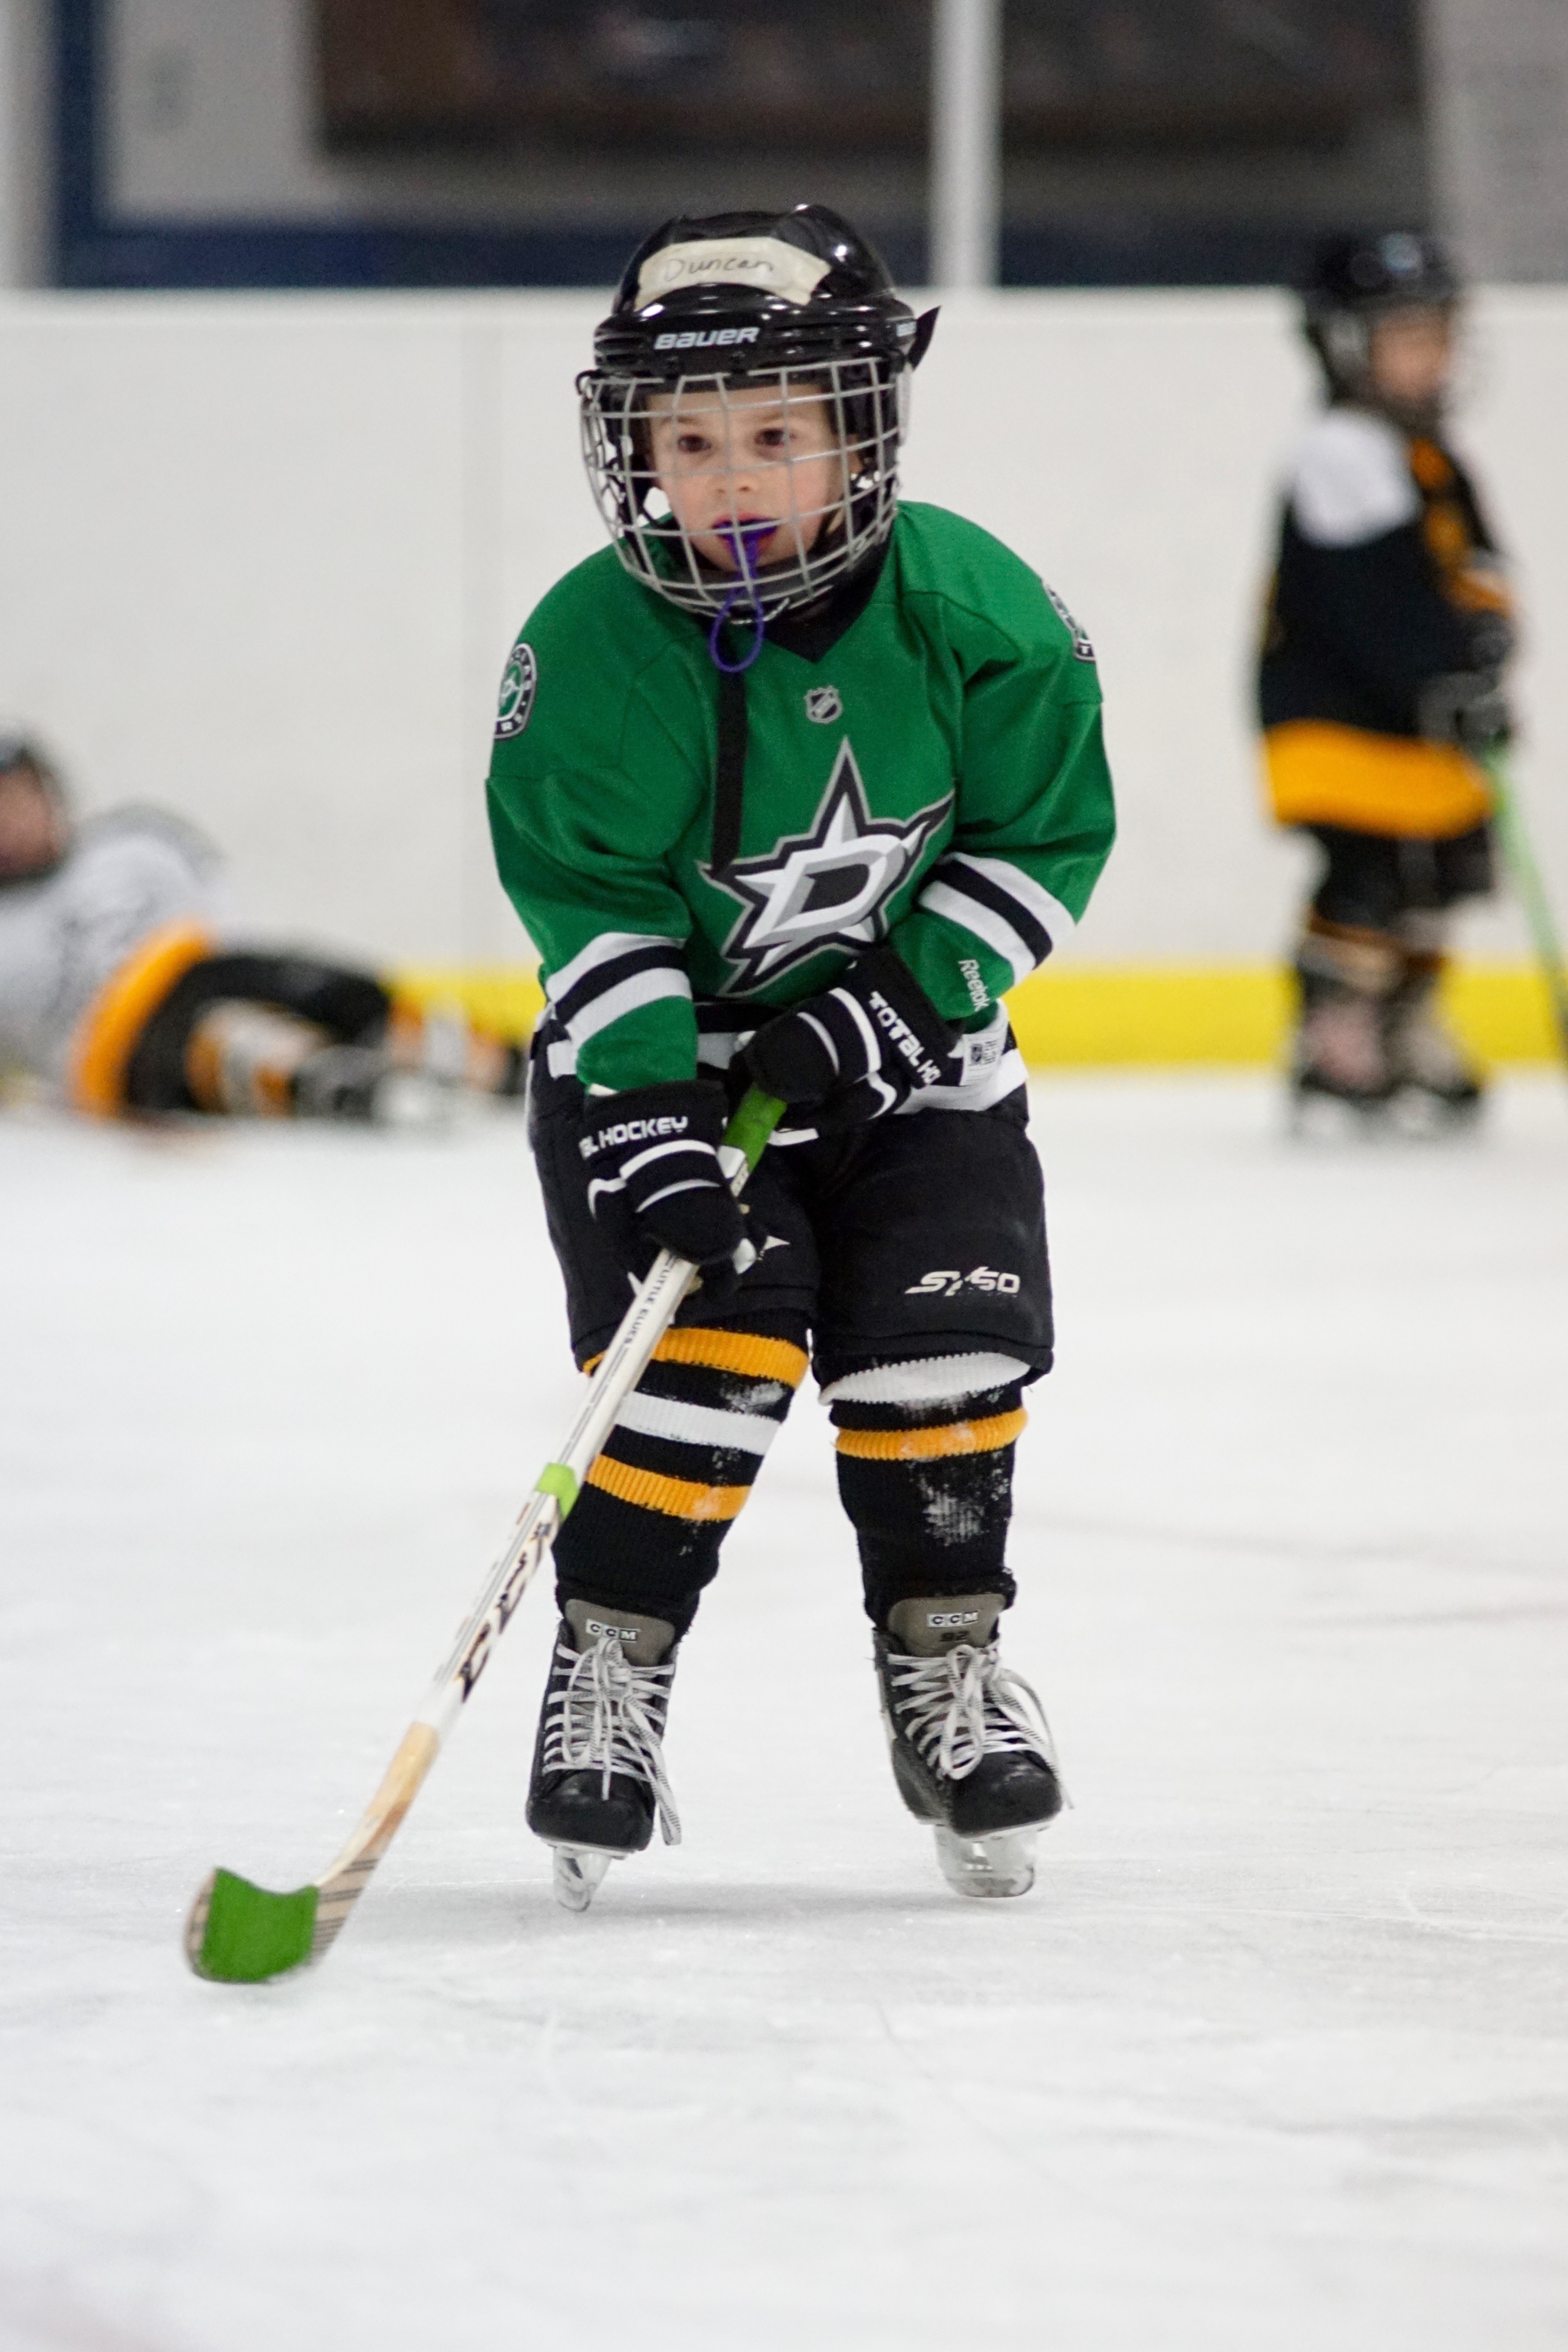 Boy in green jersey playing hockey